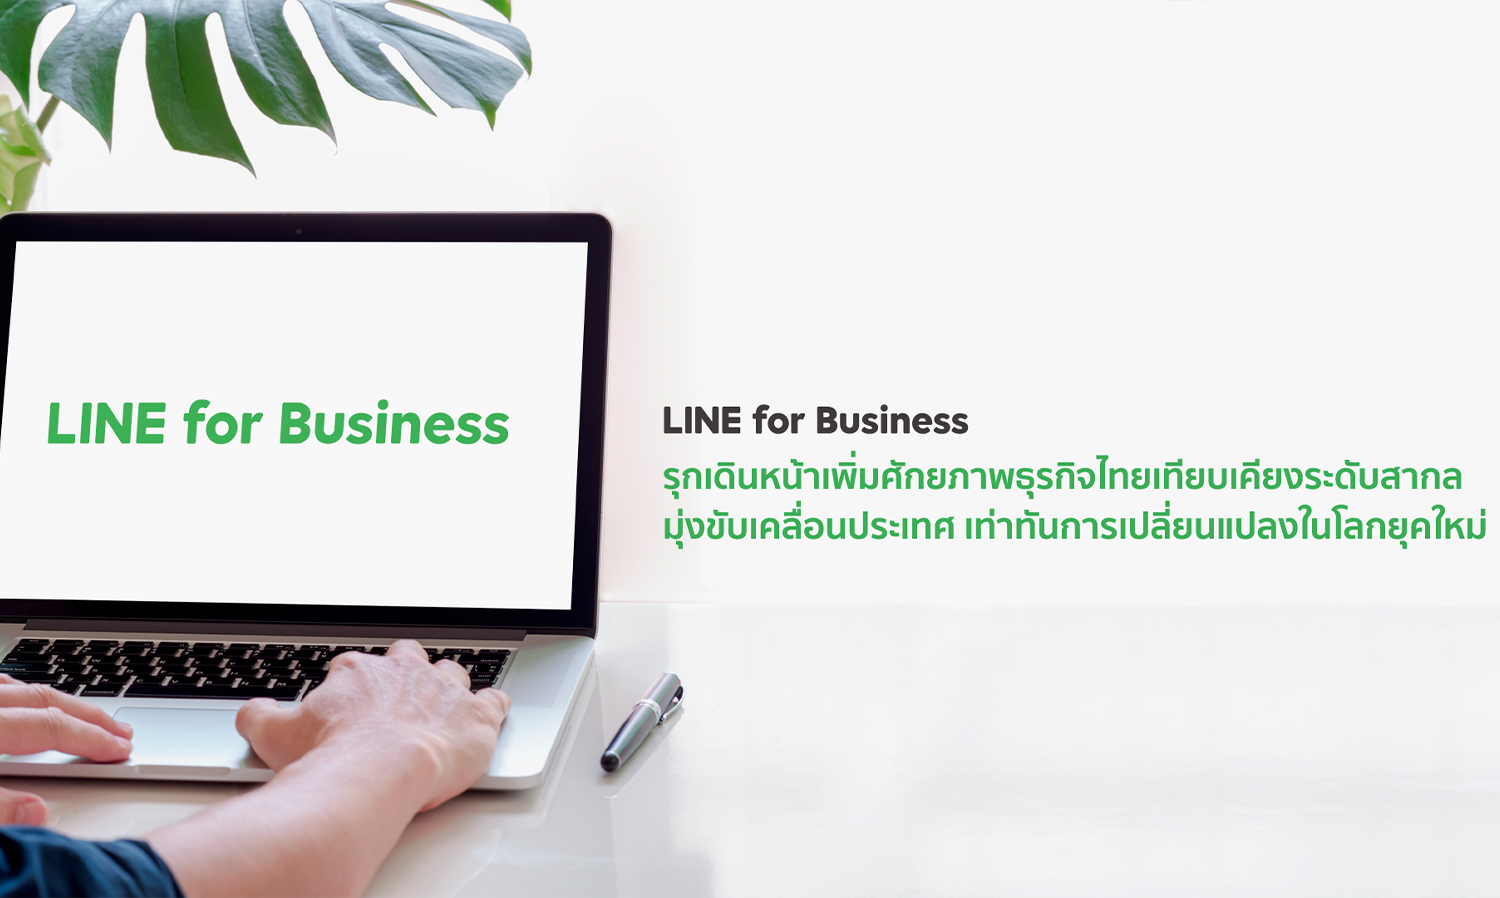 line-for-business-รุกเดินหน้าเพิ่มศักยภาพธุรกิจไทย-เทียบเคียงระดับสากล-มุ่งขับเคลื่อนประเทศ-เท่าทันการเปลี่ยนแปลงในโลกยุคใหม่